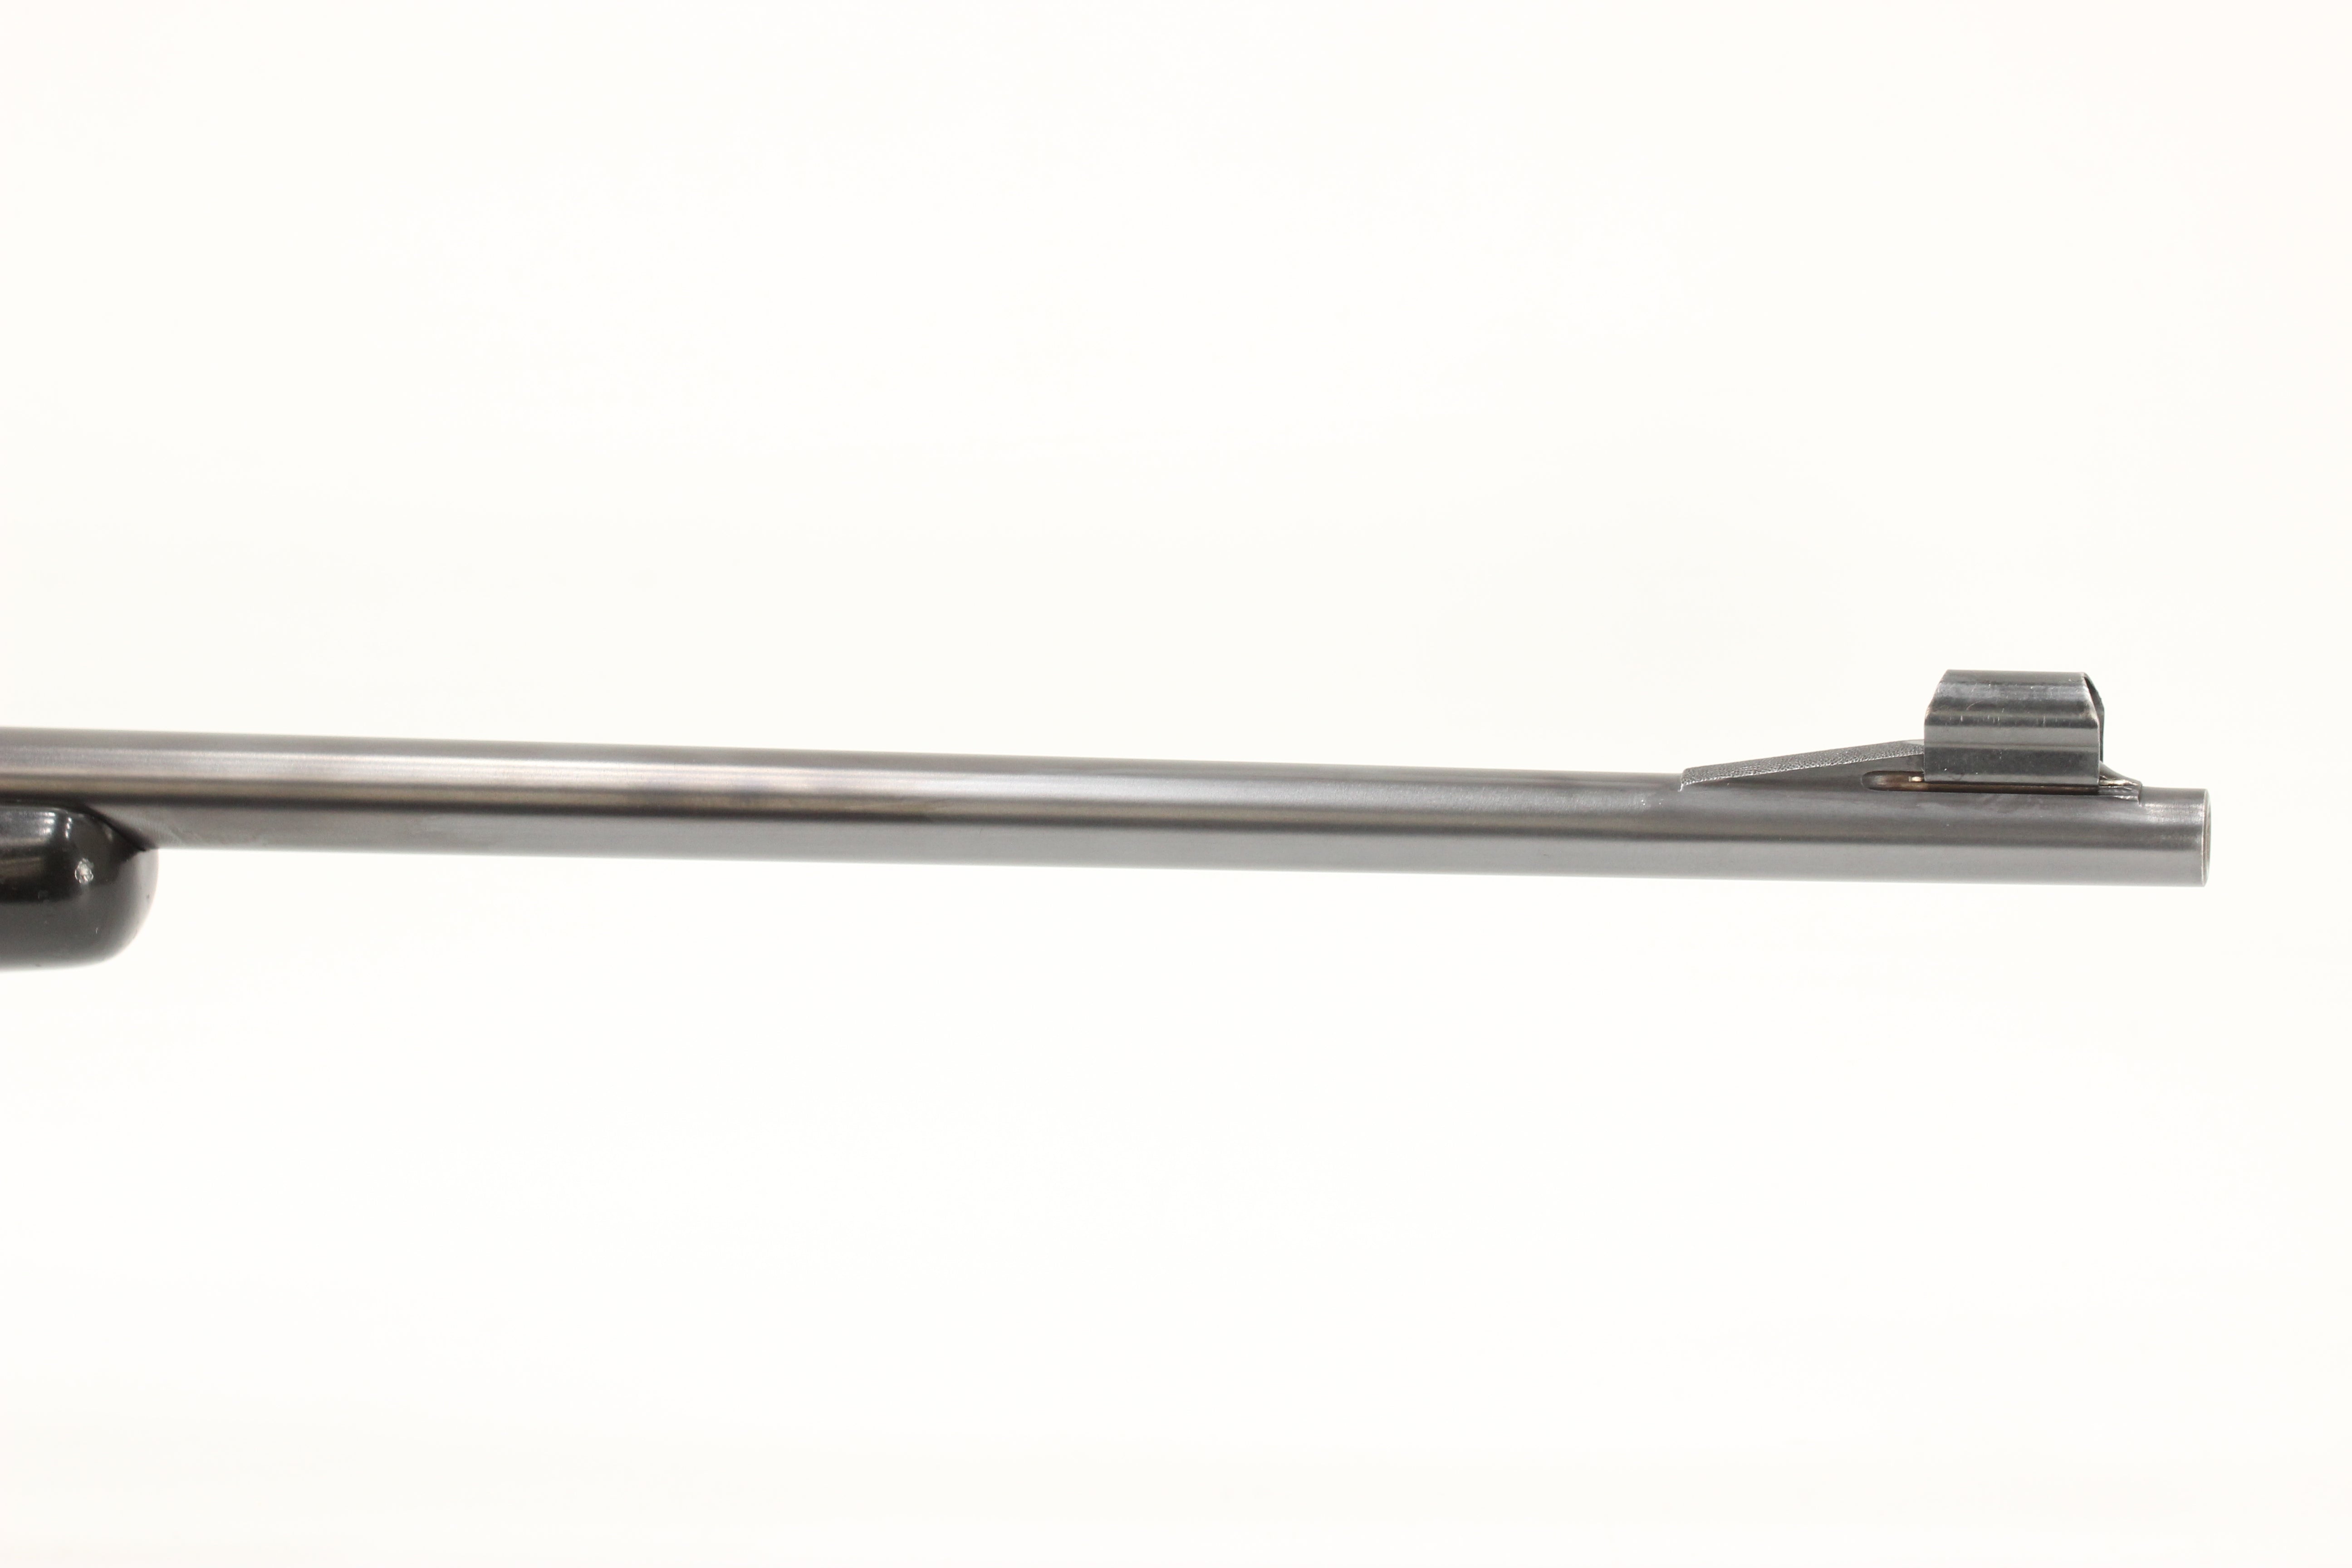 7 M/M (7x57mm Mauser) Super Grade Rifle - 1941